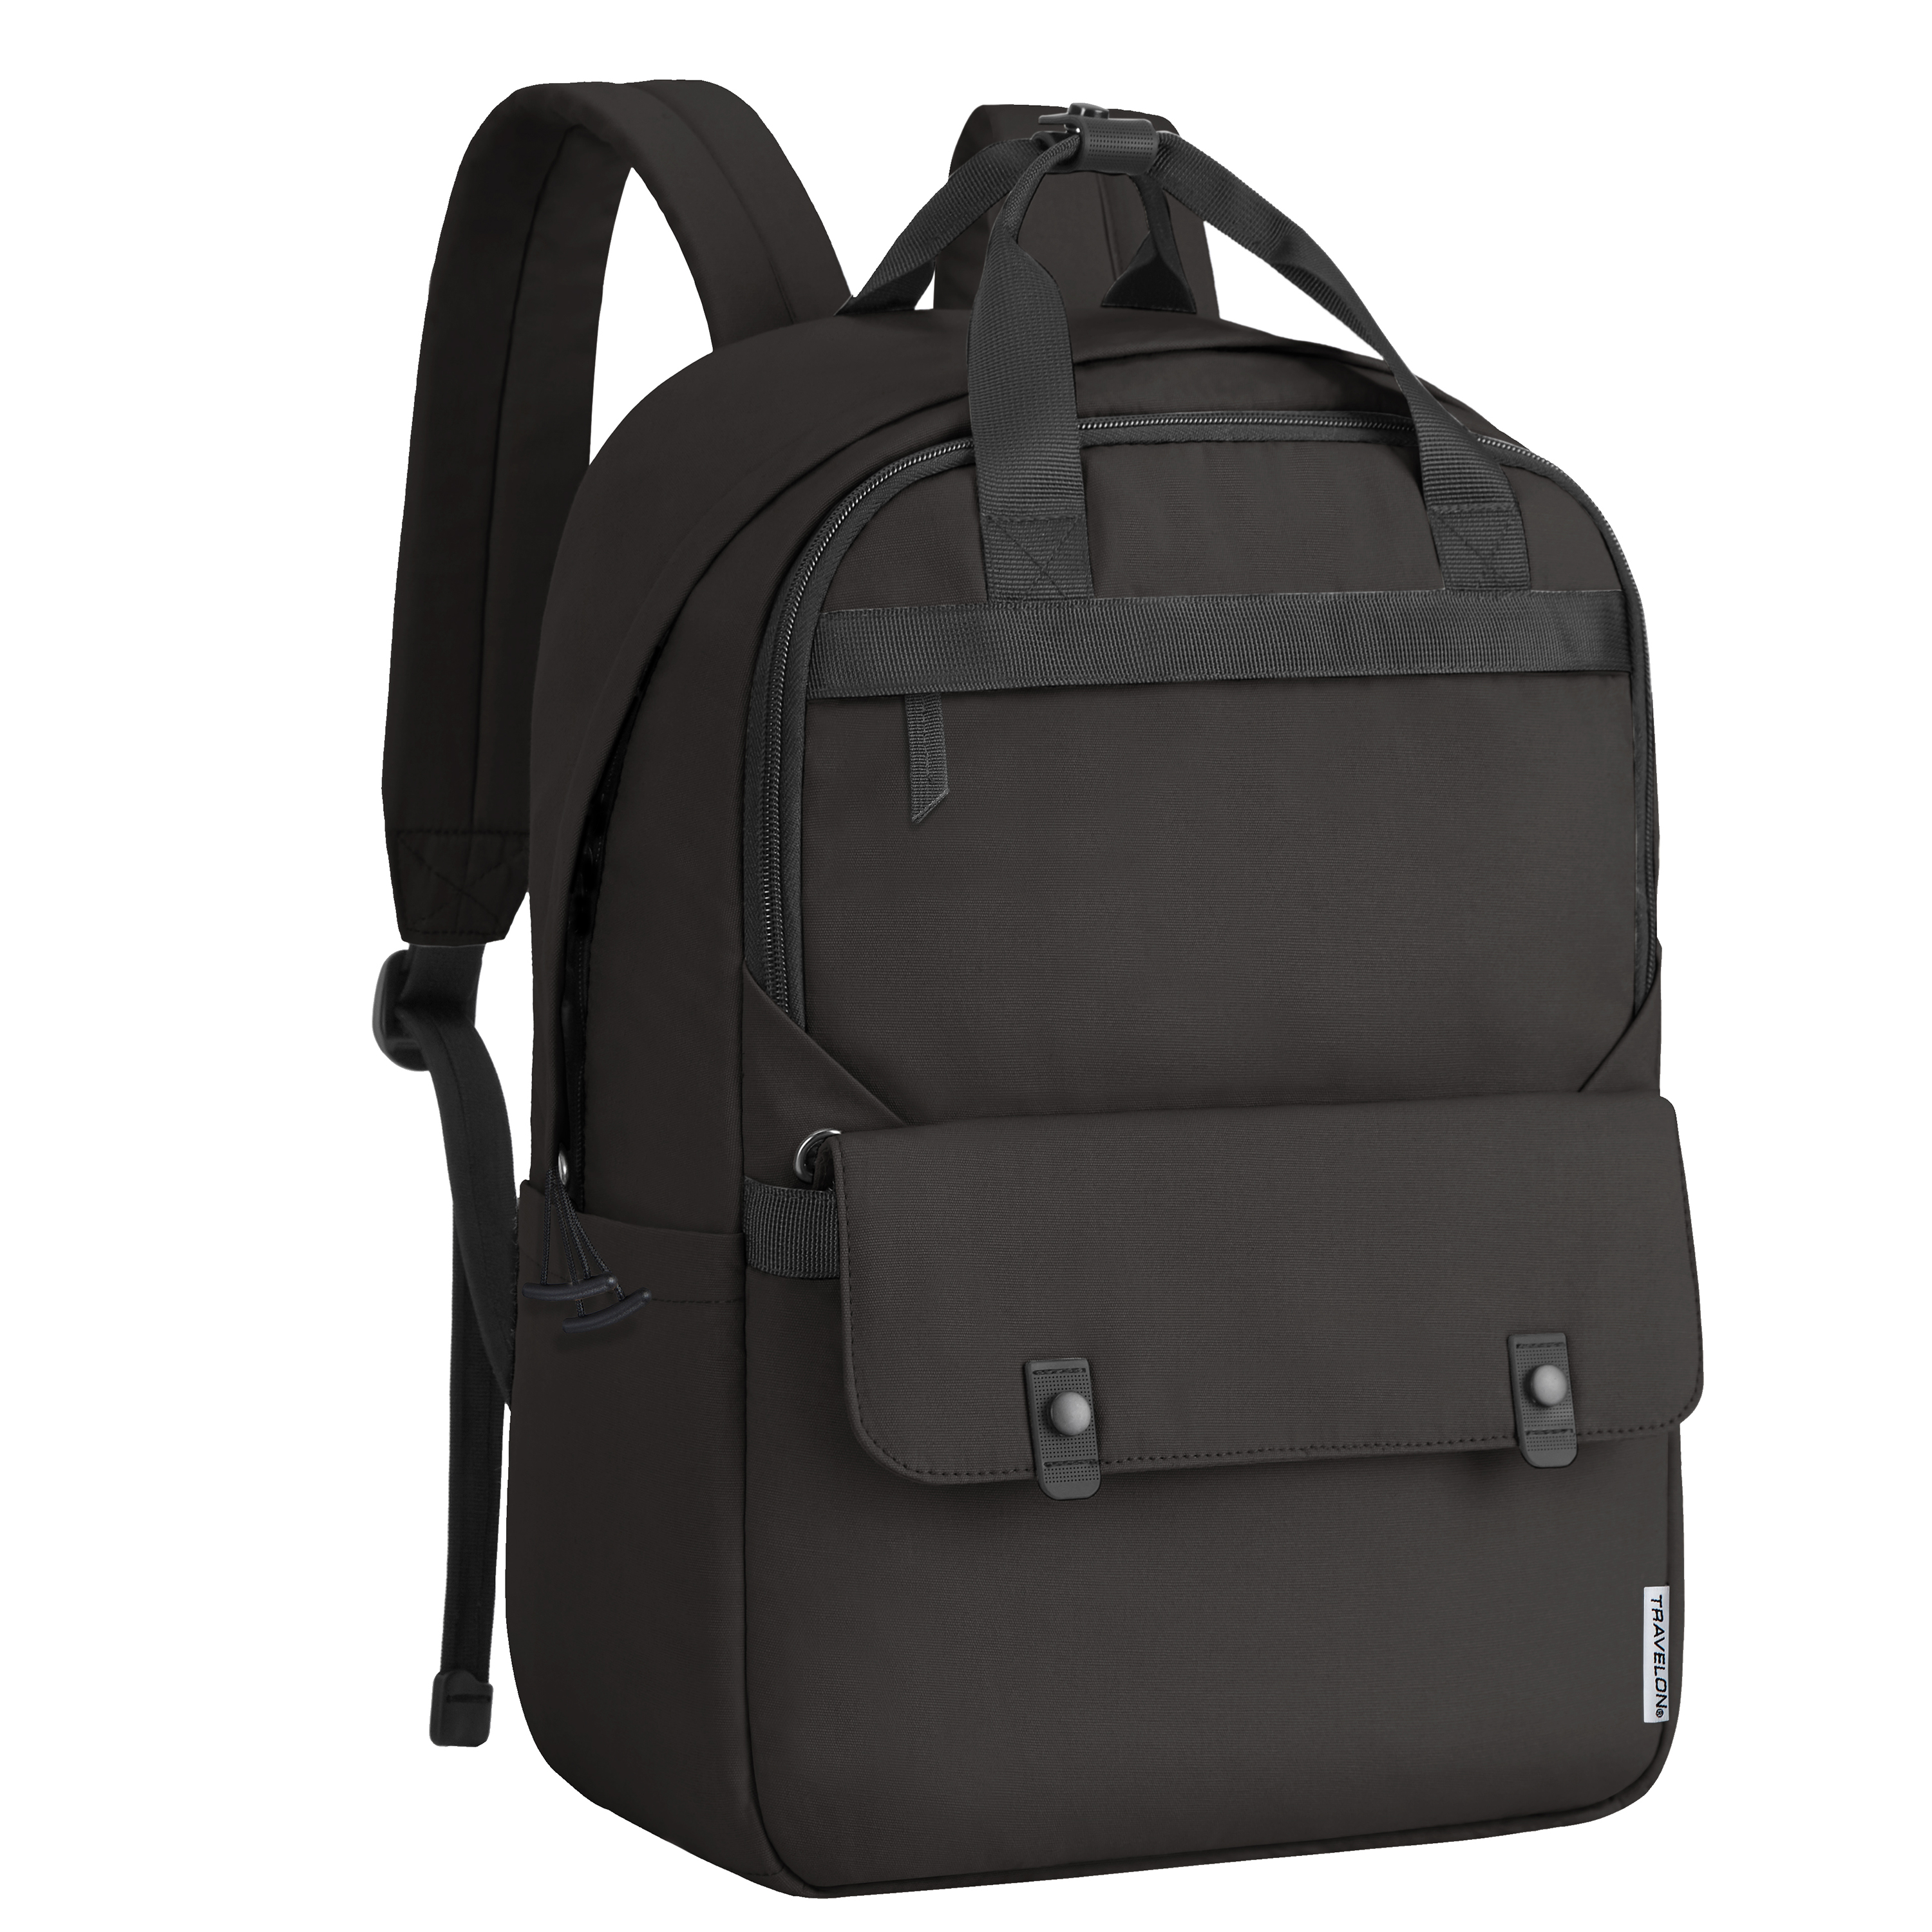 Travelon: Origin - Anti-Theft - Large Backpack - SILVADUR TREATED - Black - image 2 of 11